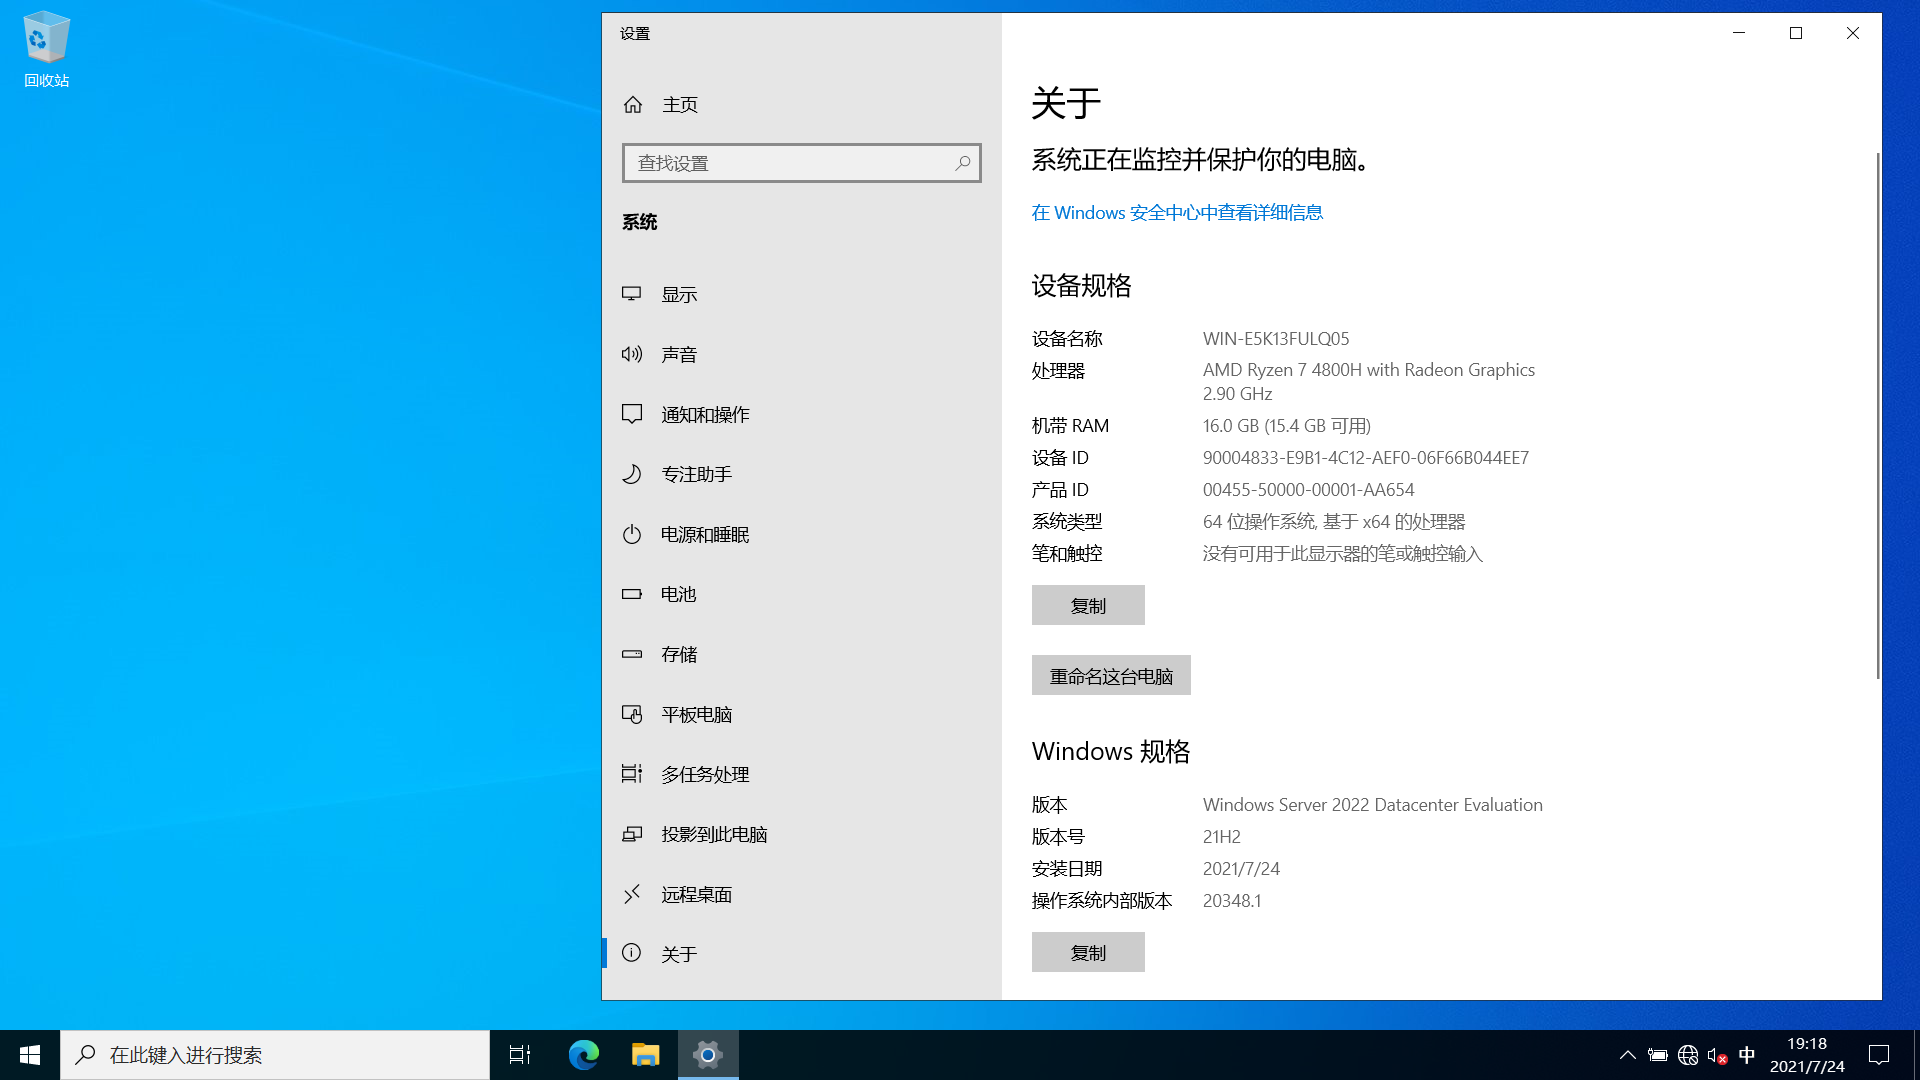 WindowsServer2022LTSCBuild20348.1简体中文版-程序员阿鑫-带你一起秃头-第1张图片